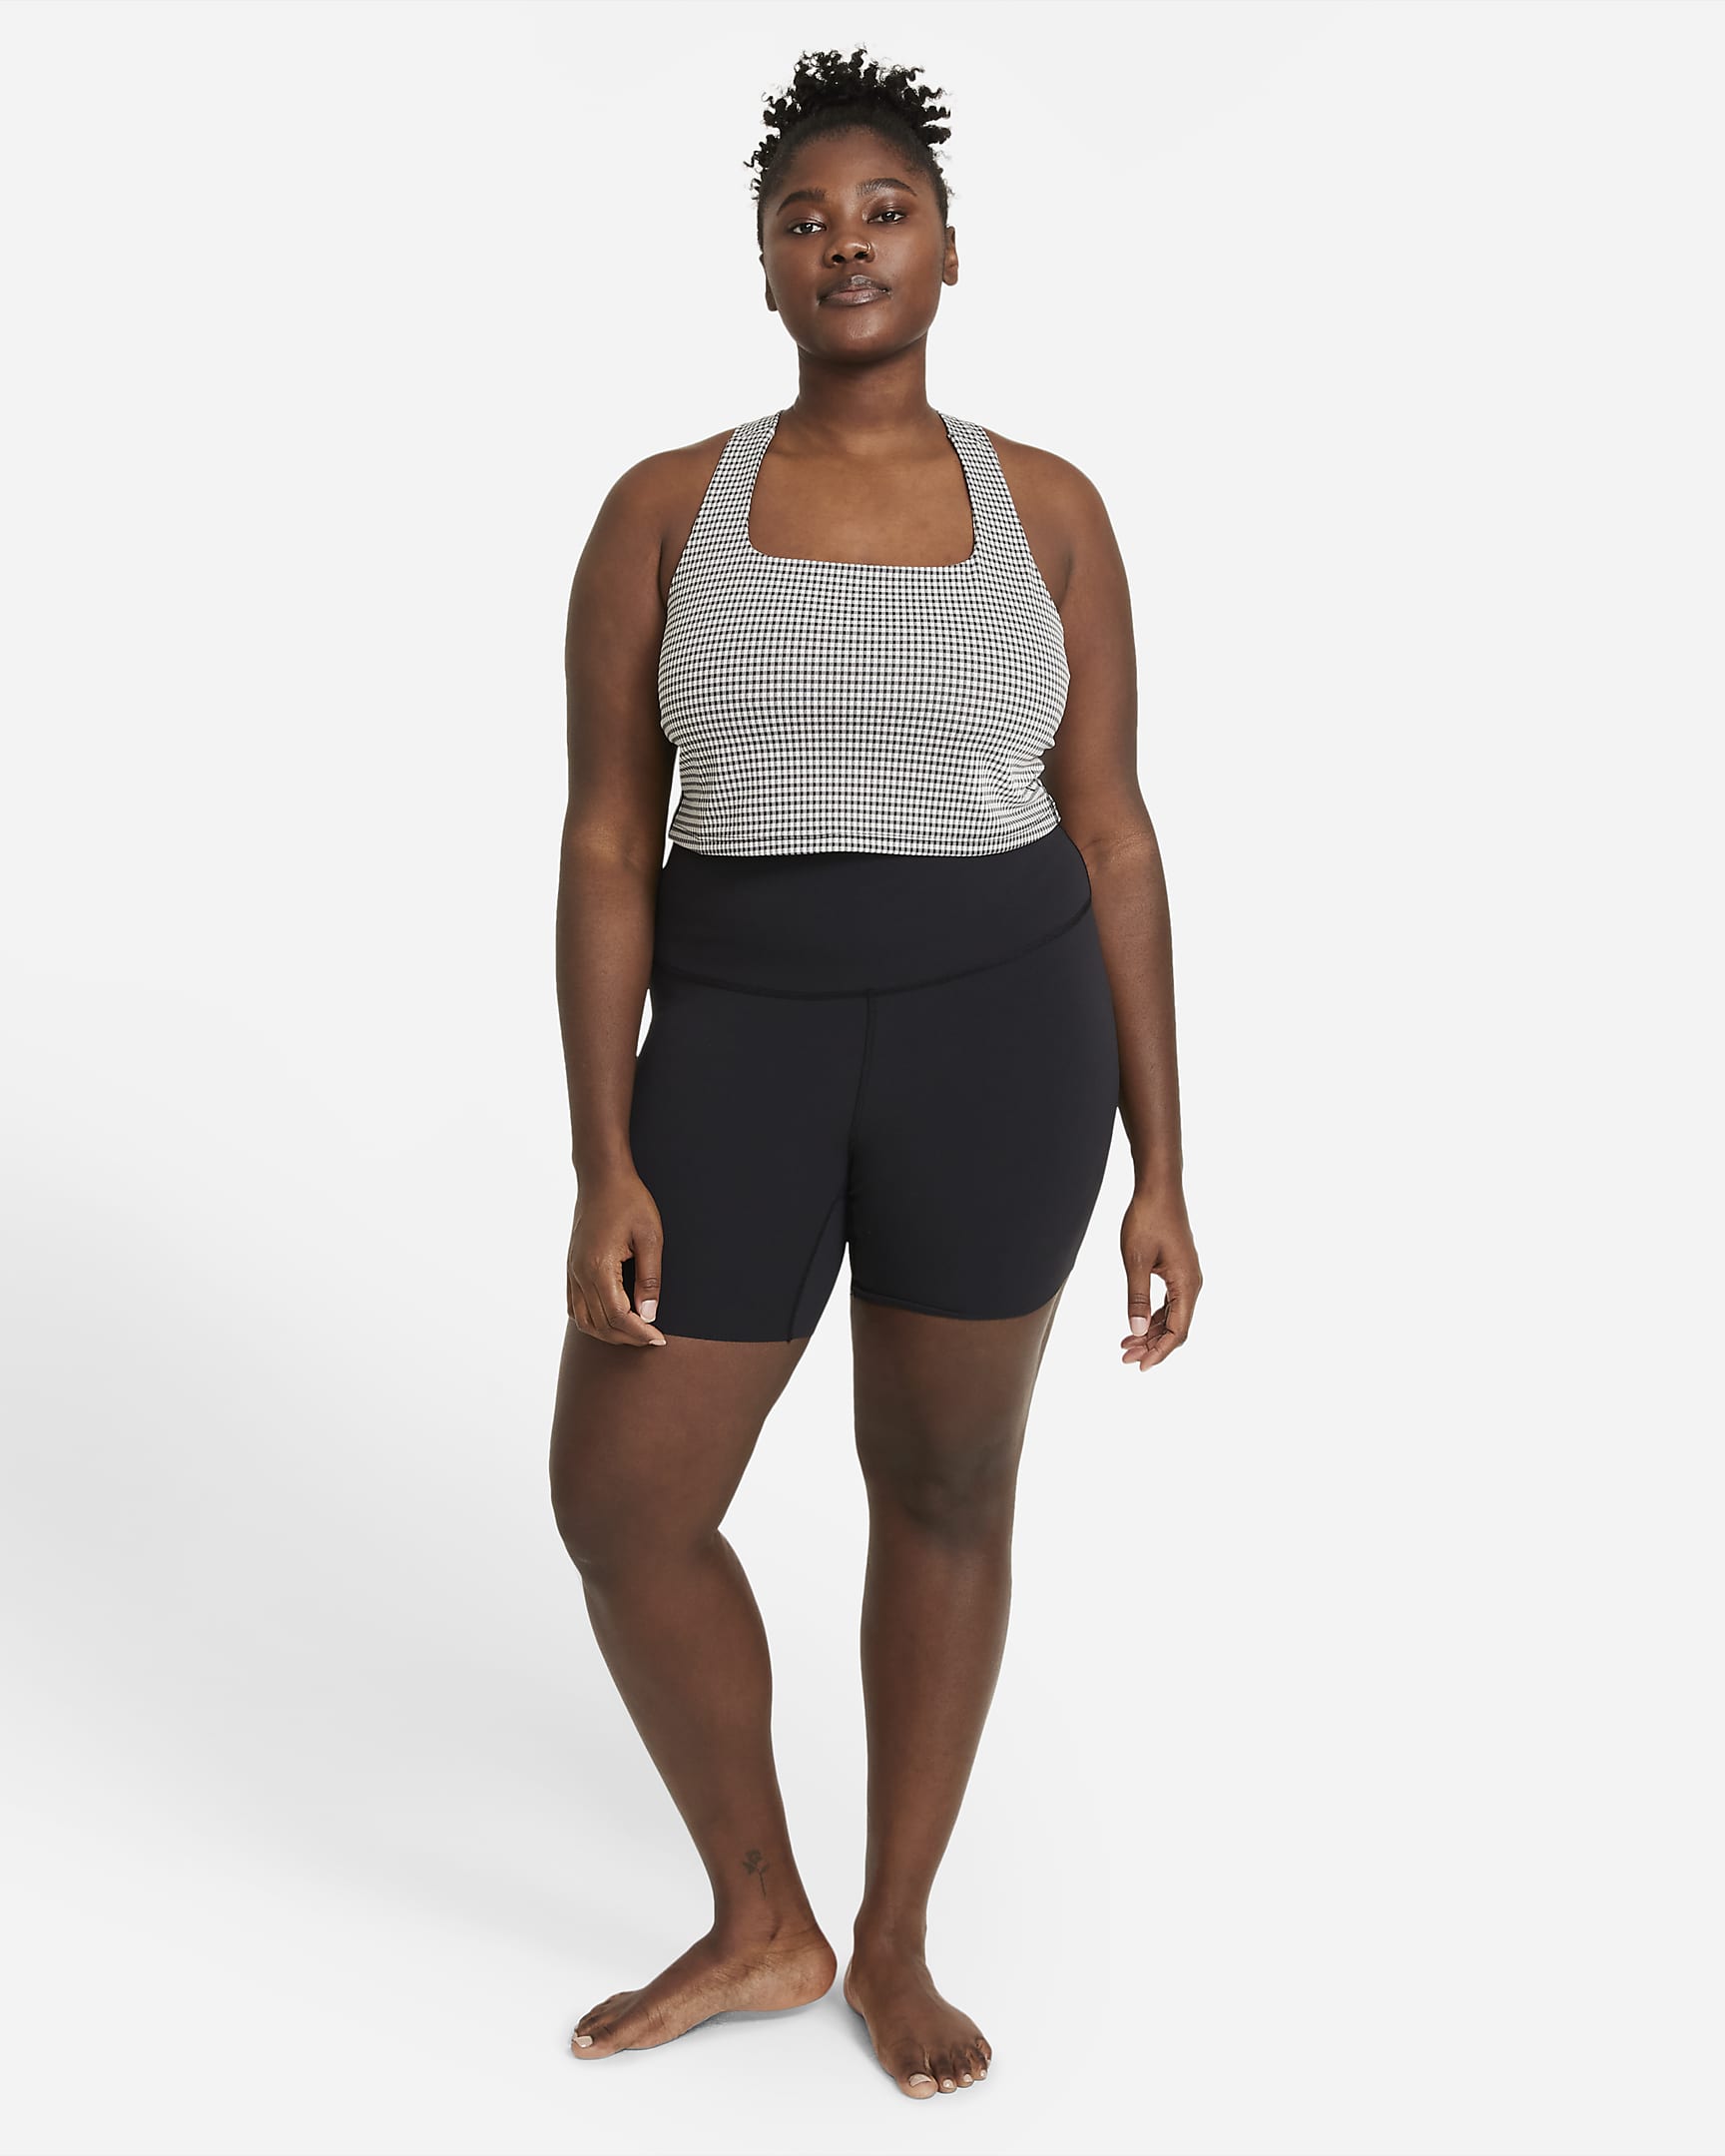 Nike Yoga Women's Cropped Gingham Tank (Plus Size). Nike.com